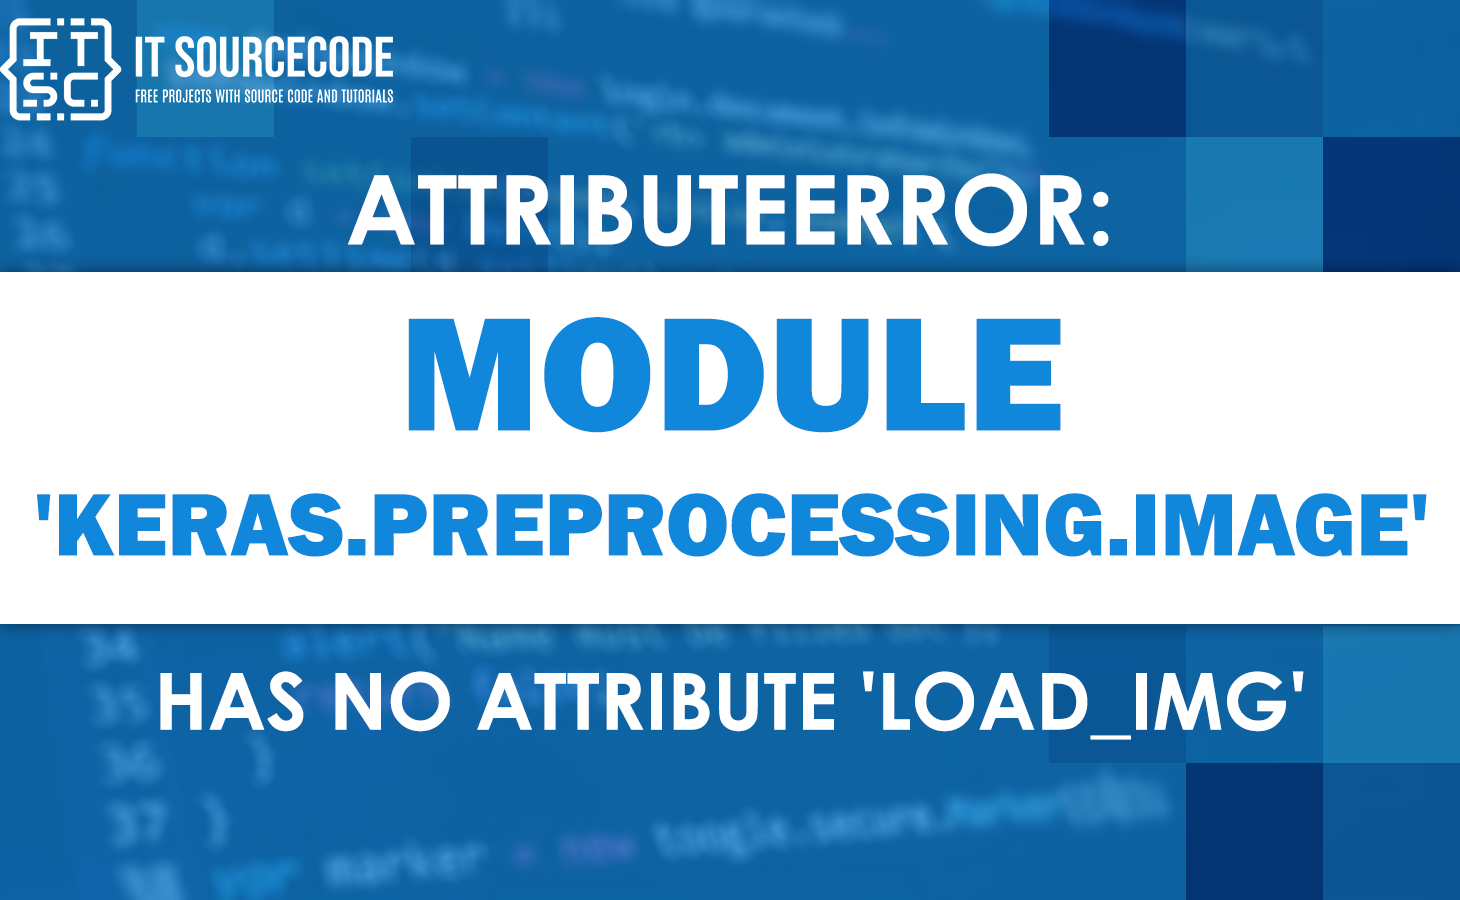 attributeerror: module 'keras.preprocessing.image' has no attribute 'load_img'